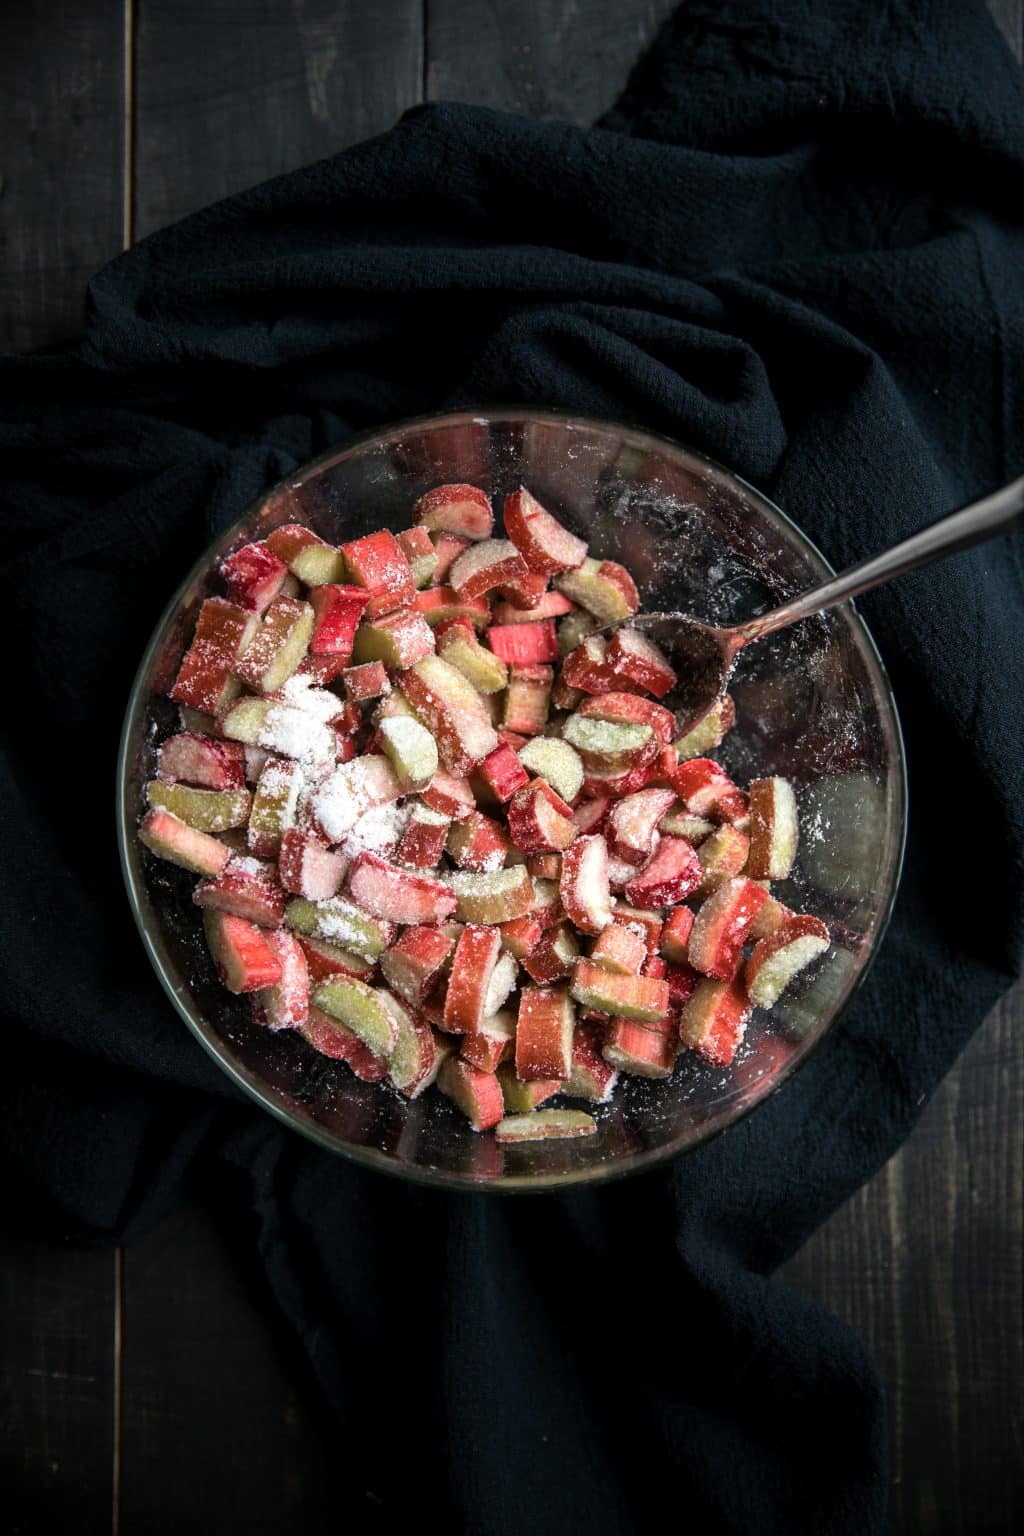 rhubarb in bowl